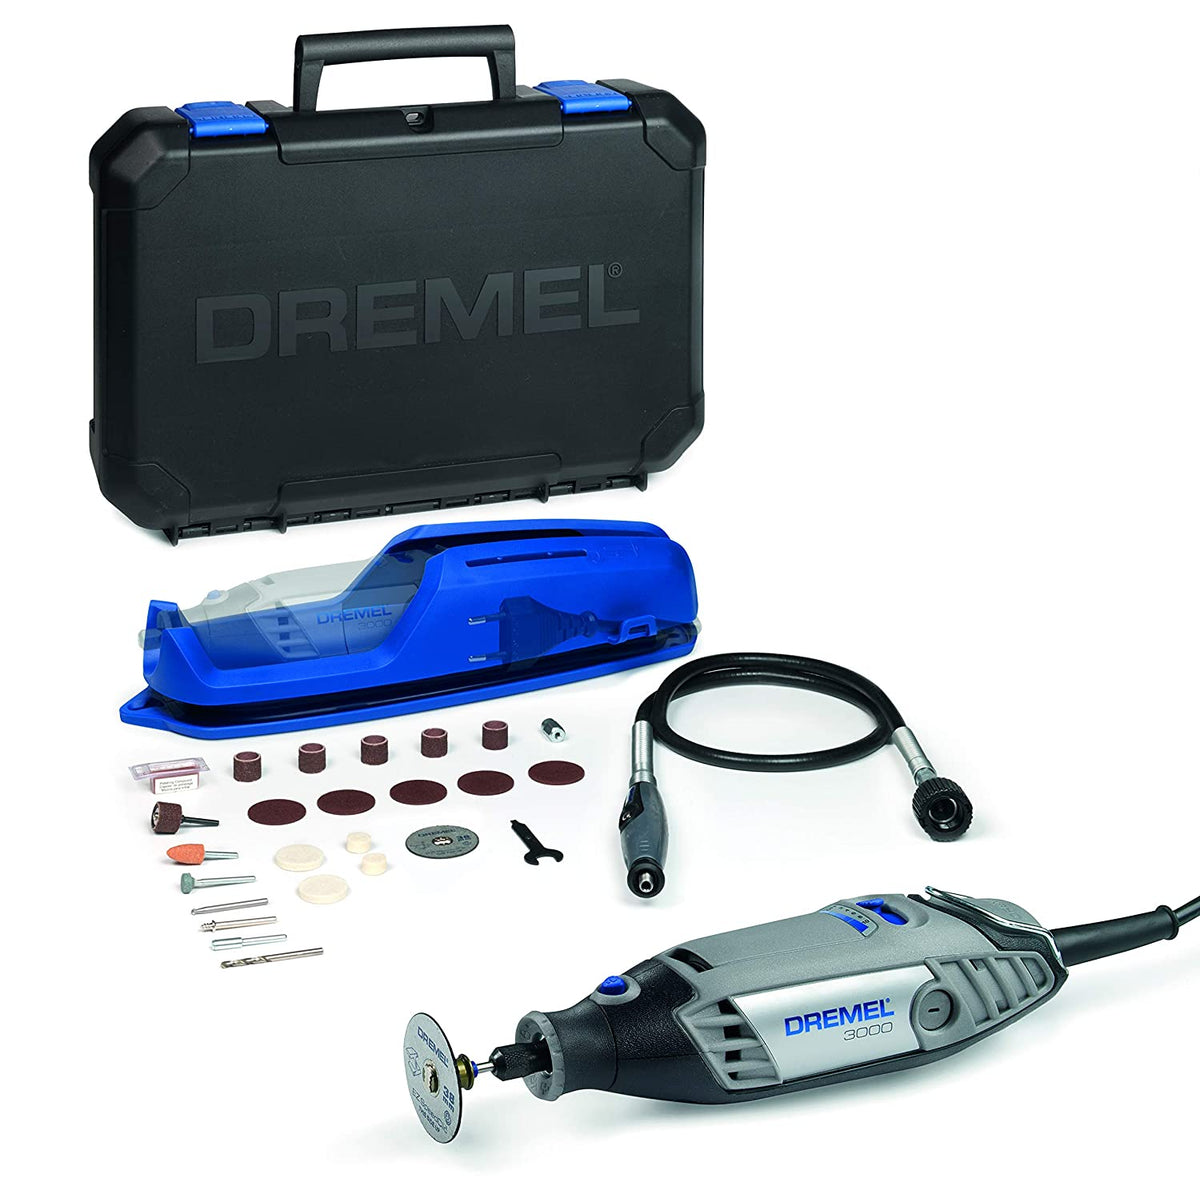 Dremel 3000 (3000-1/25 EZ) multi-tool + accessories Botland - Robotic Shop